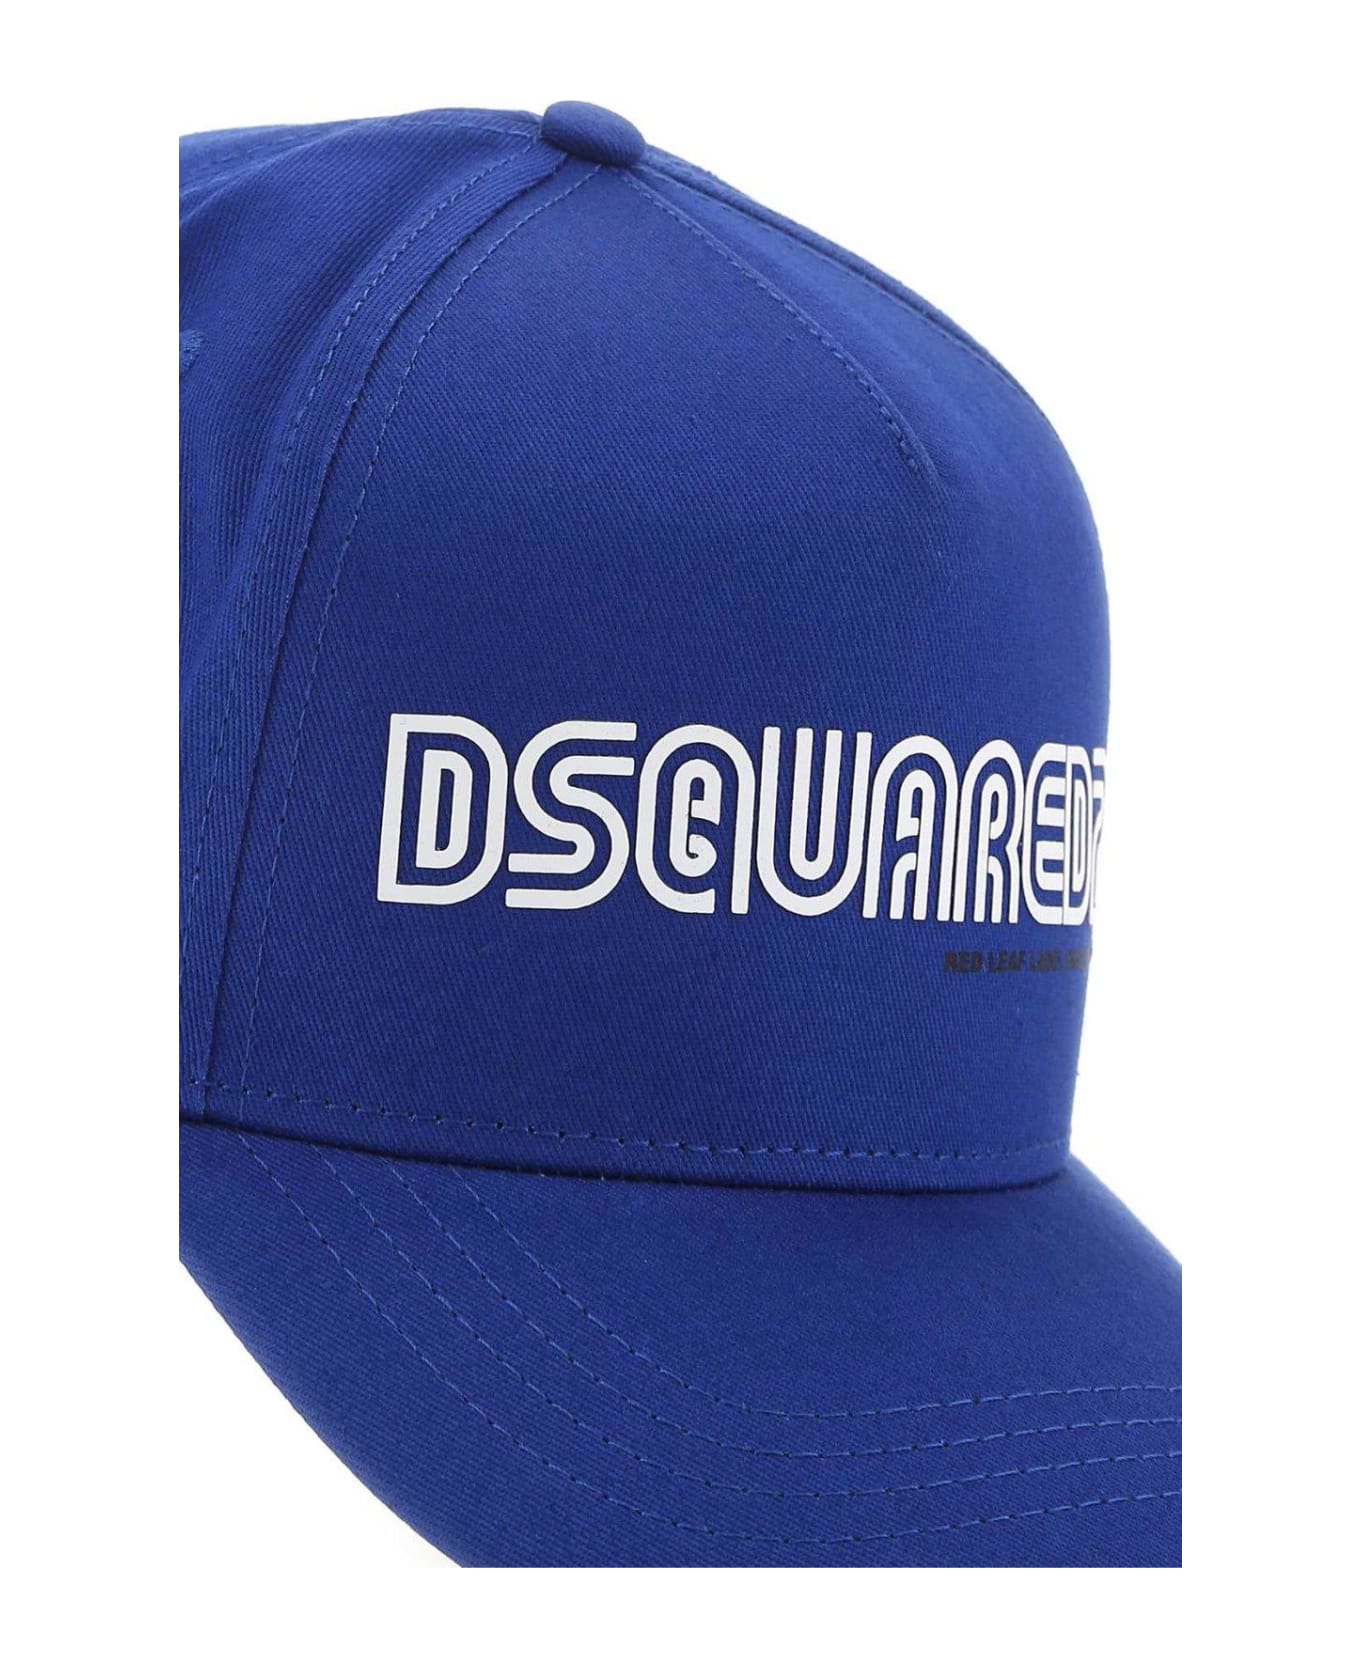 Dsquared2 Logo Printed Distressed Baseball Cap - Blu elettrico 帽子